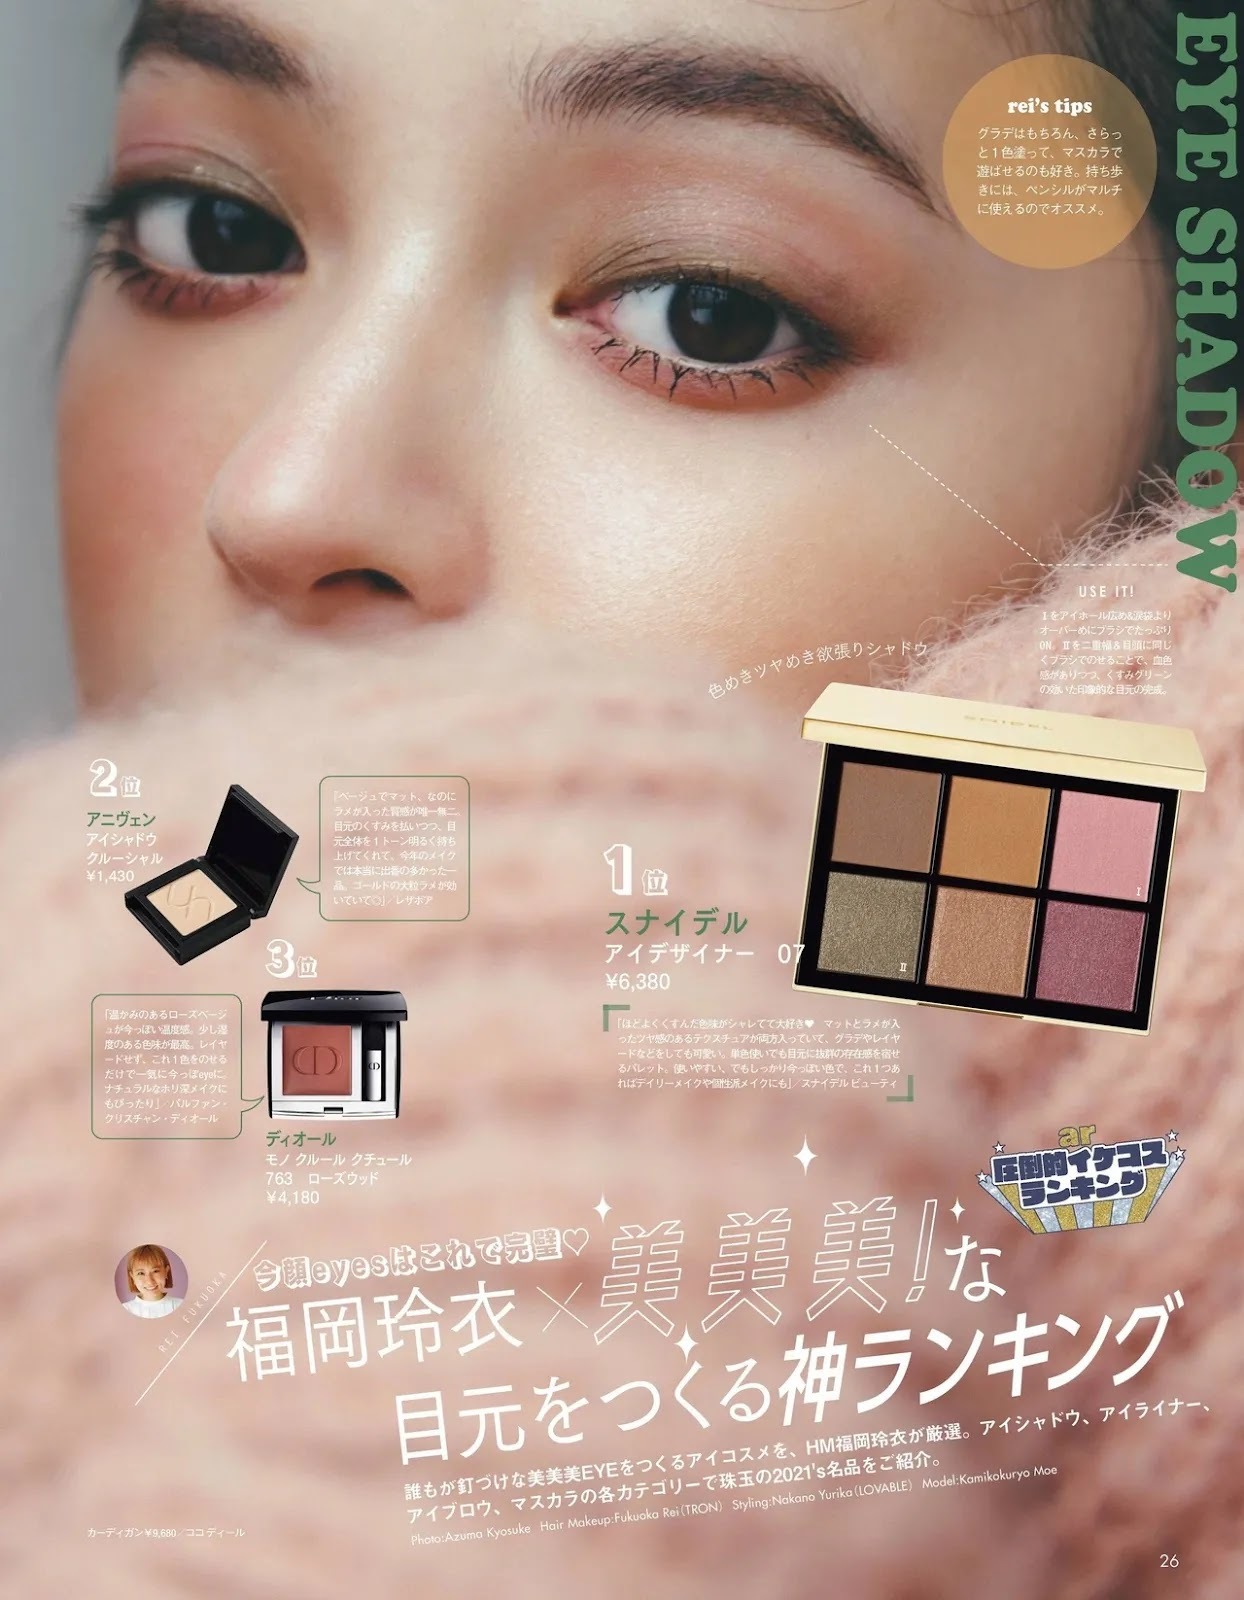 Kamikokuryo Moe上国料萌衣，aR Magazine 2021.12 - itotii